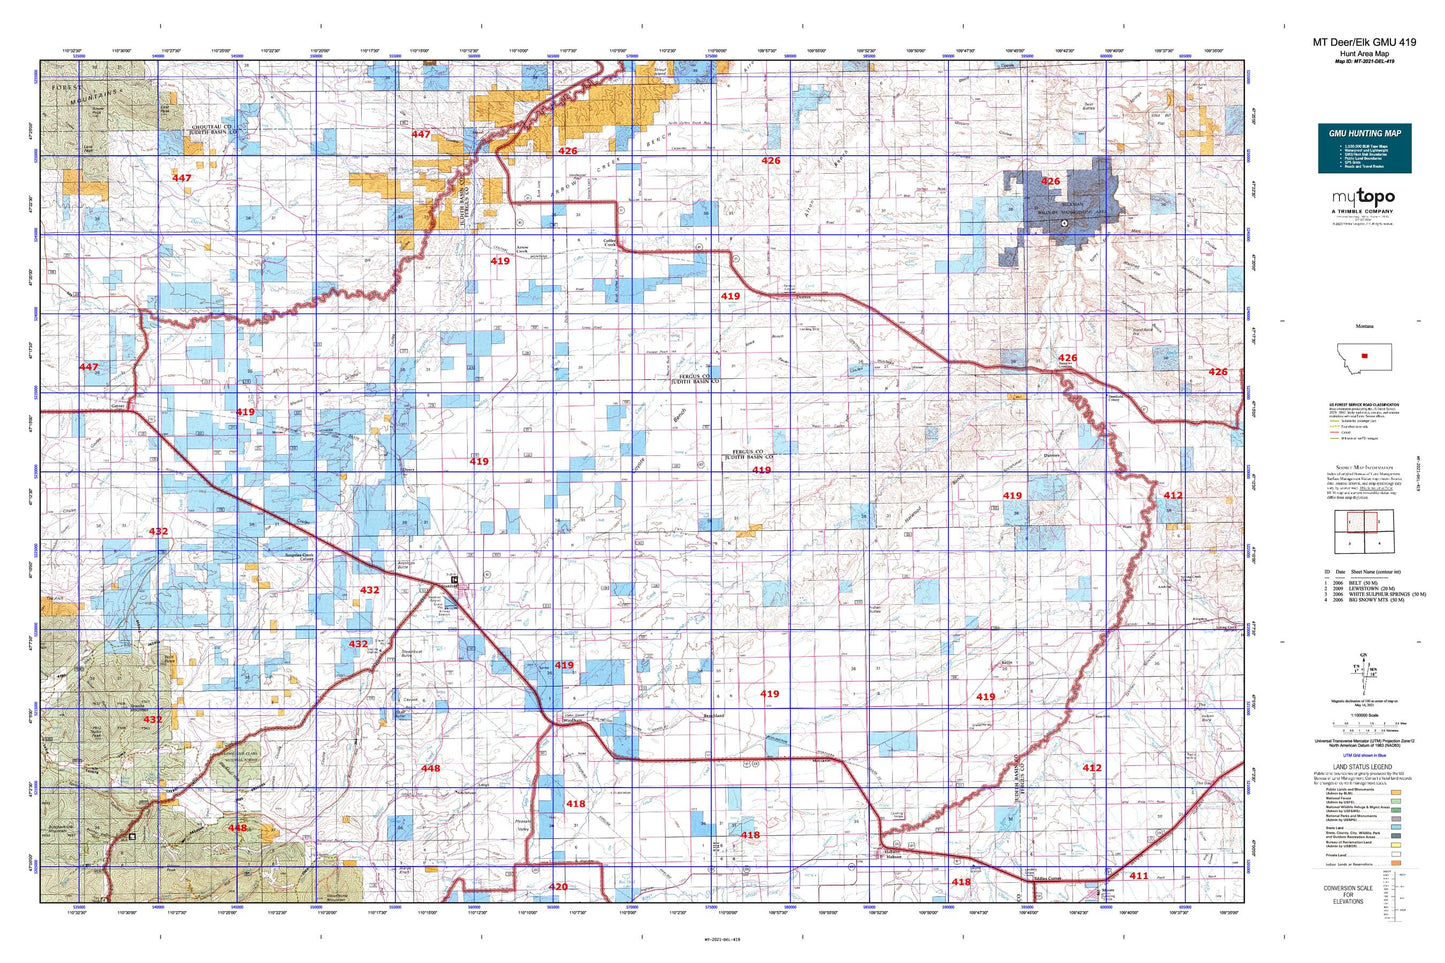 Montana Deer/Elk GMU 419 Map Image